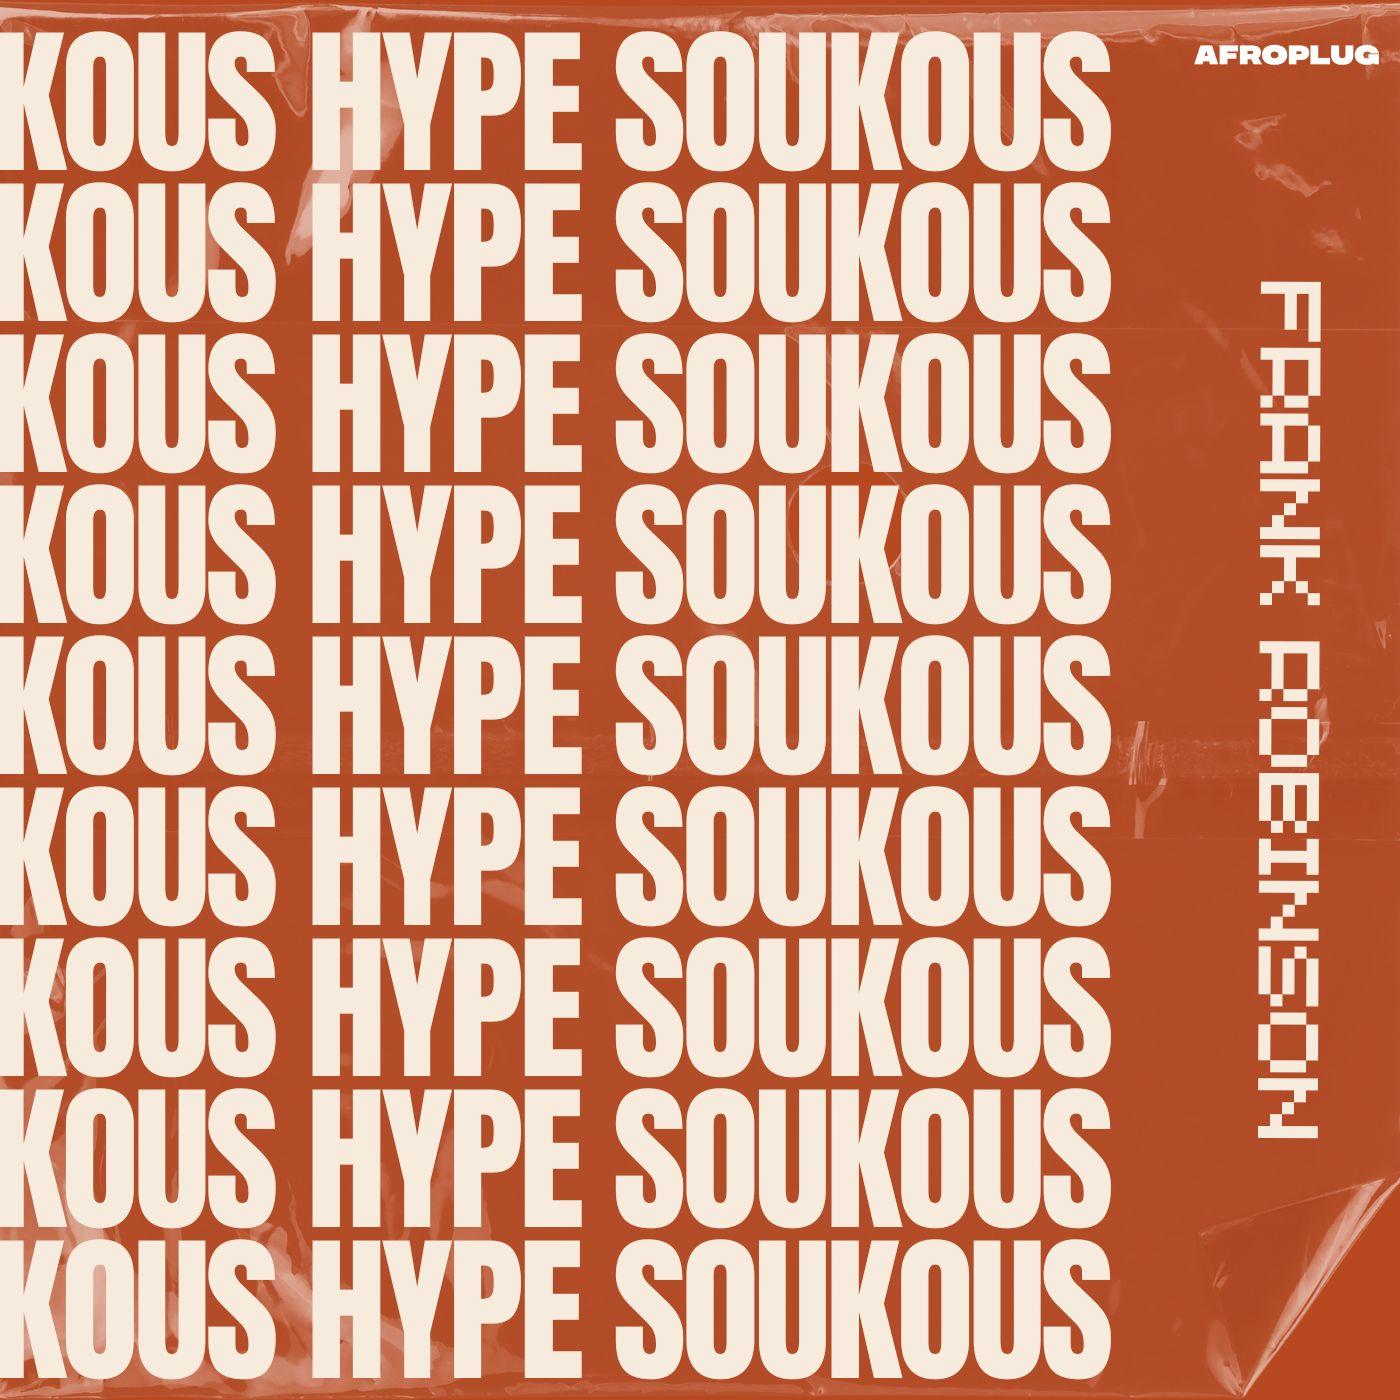 Soukous Hype - 20+ Guitars Loops for Inoss B, Koffi Olomidé & Fally Ipupa vibes